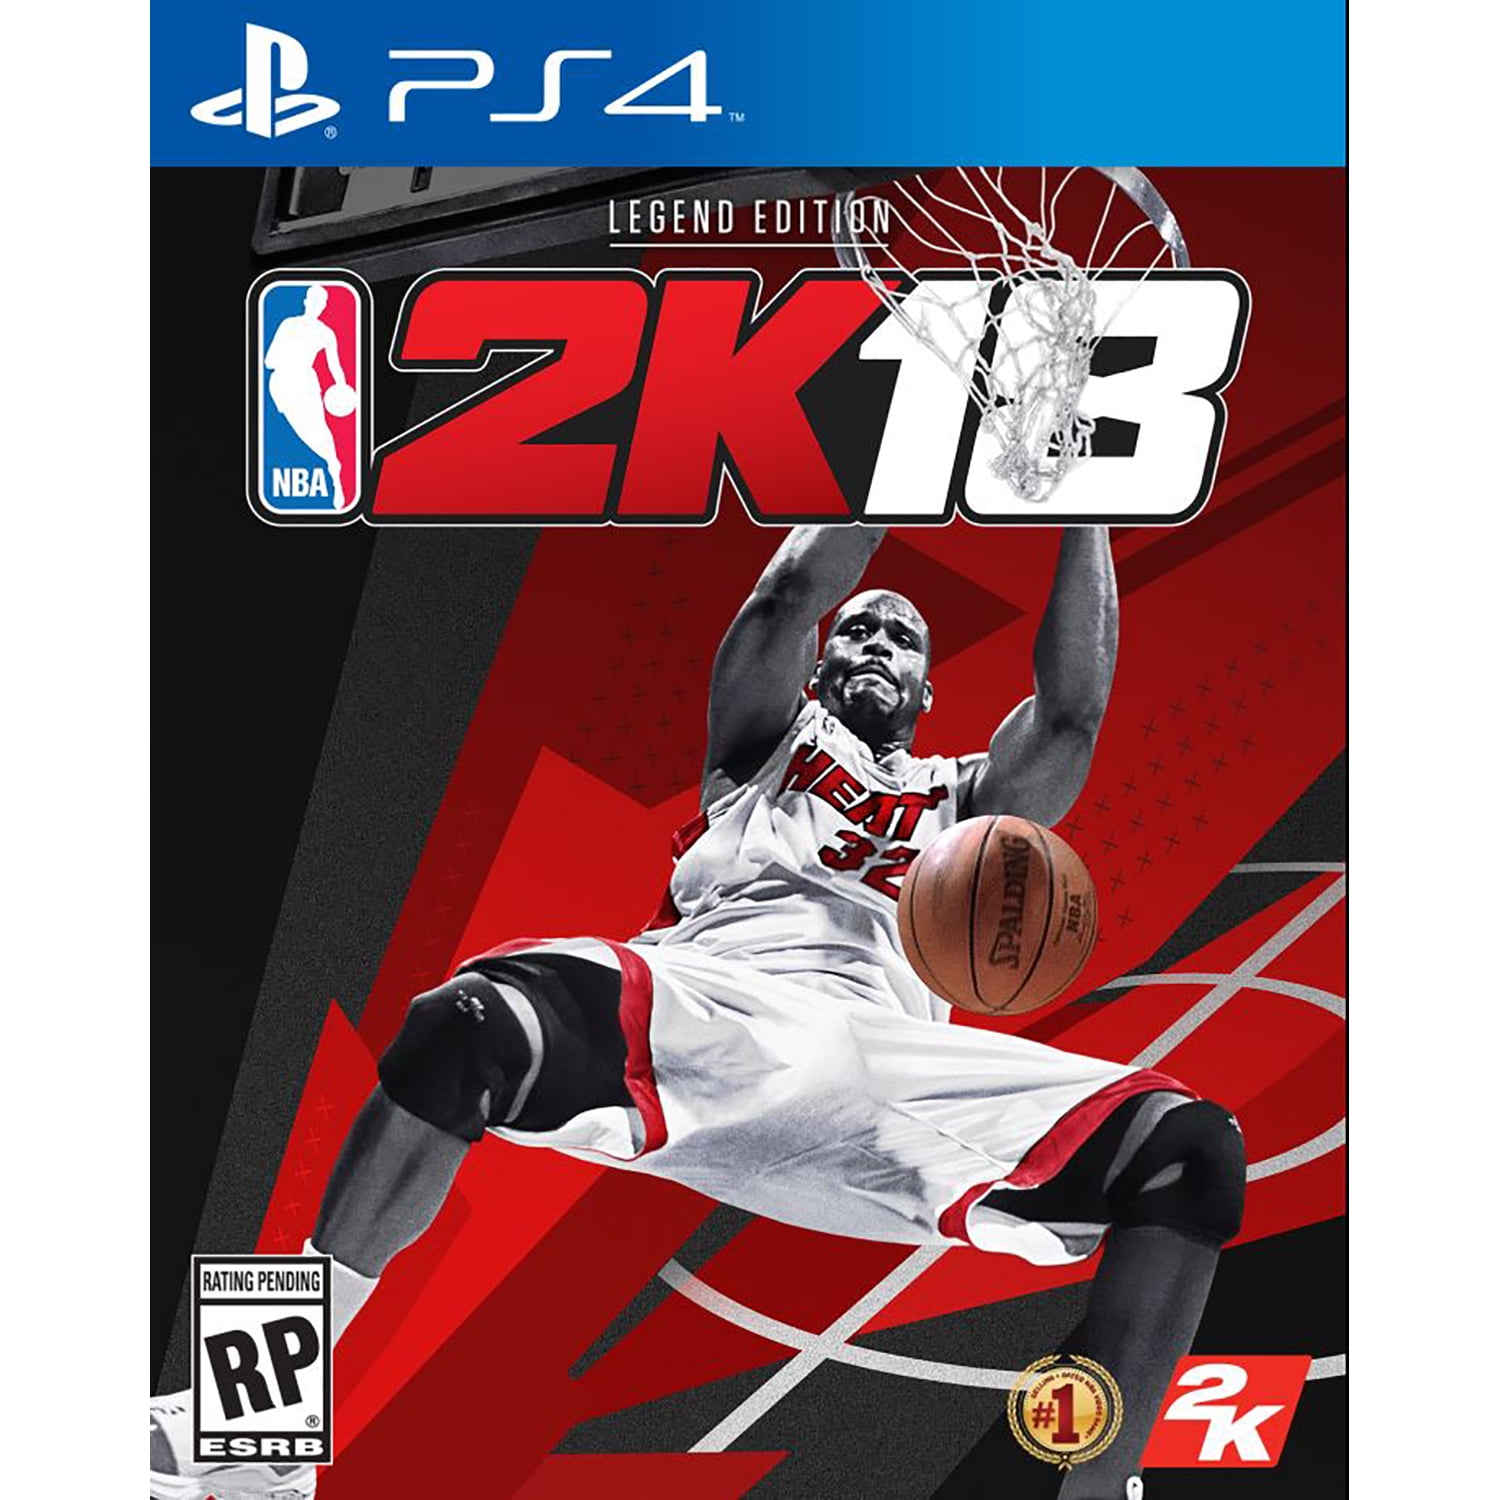 NBA 2K18 Legend Edition, 2K, PlayStation 4, 710425479120 